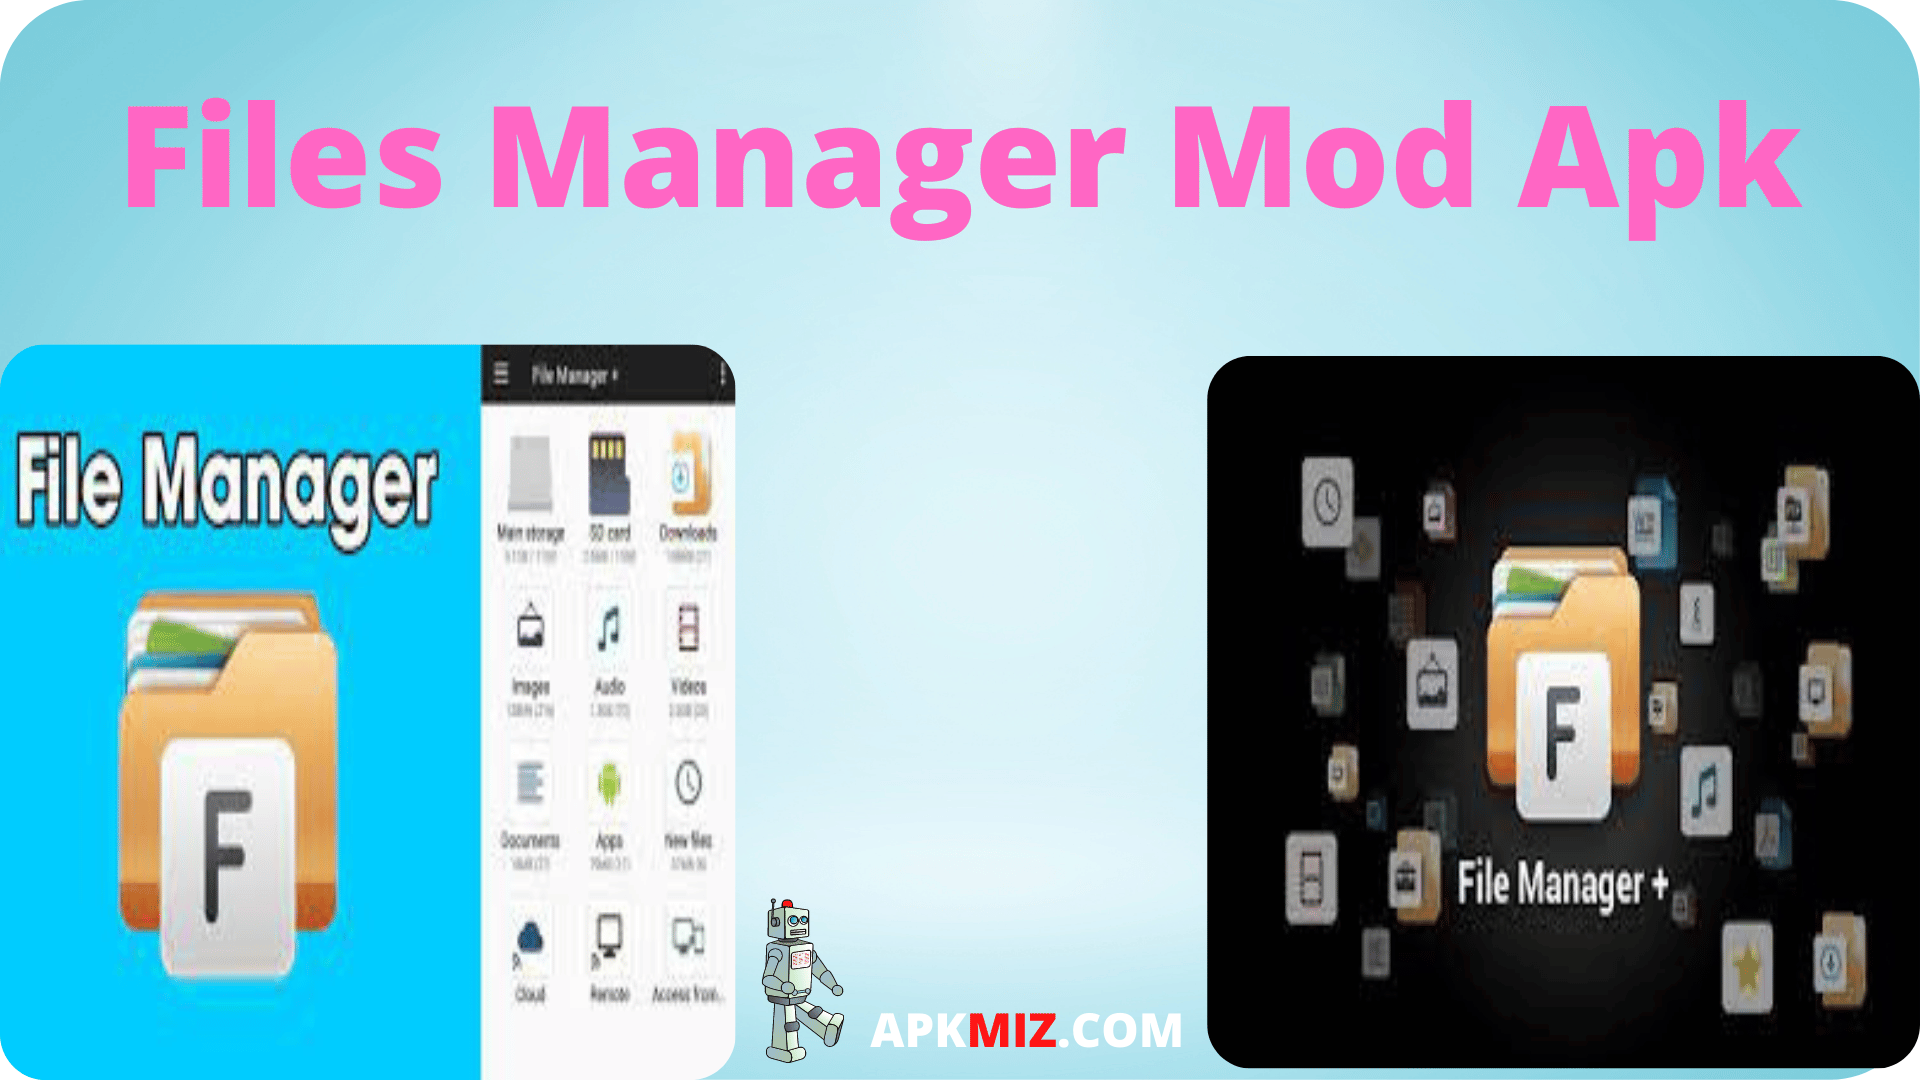 Files Manager Mod Apk